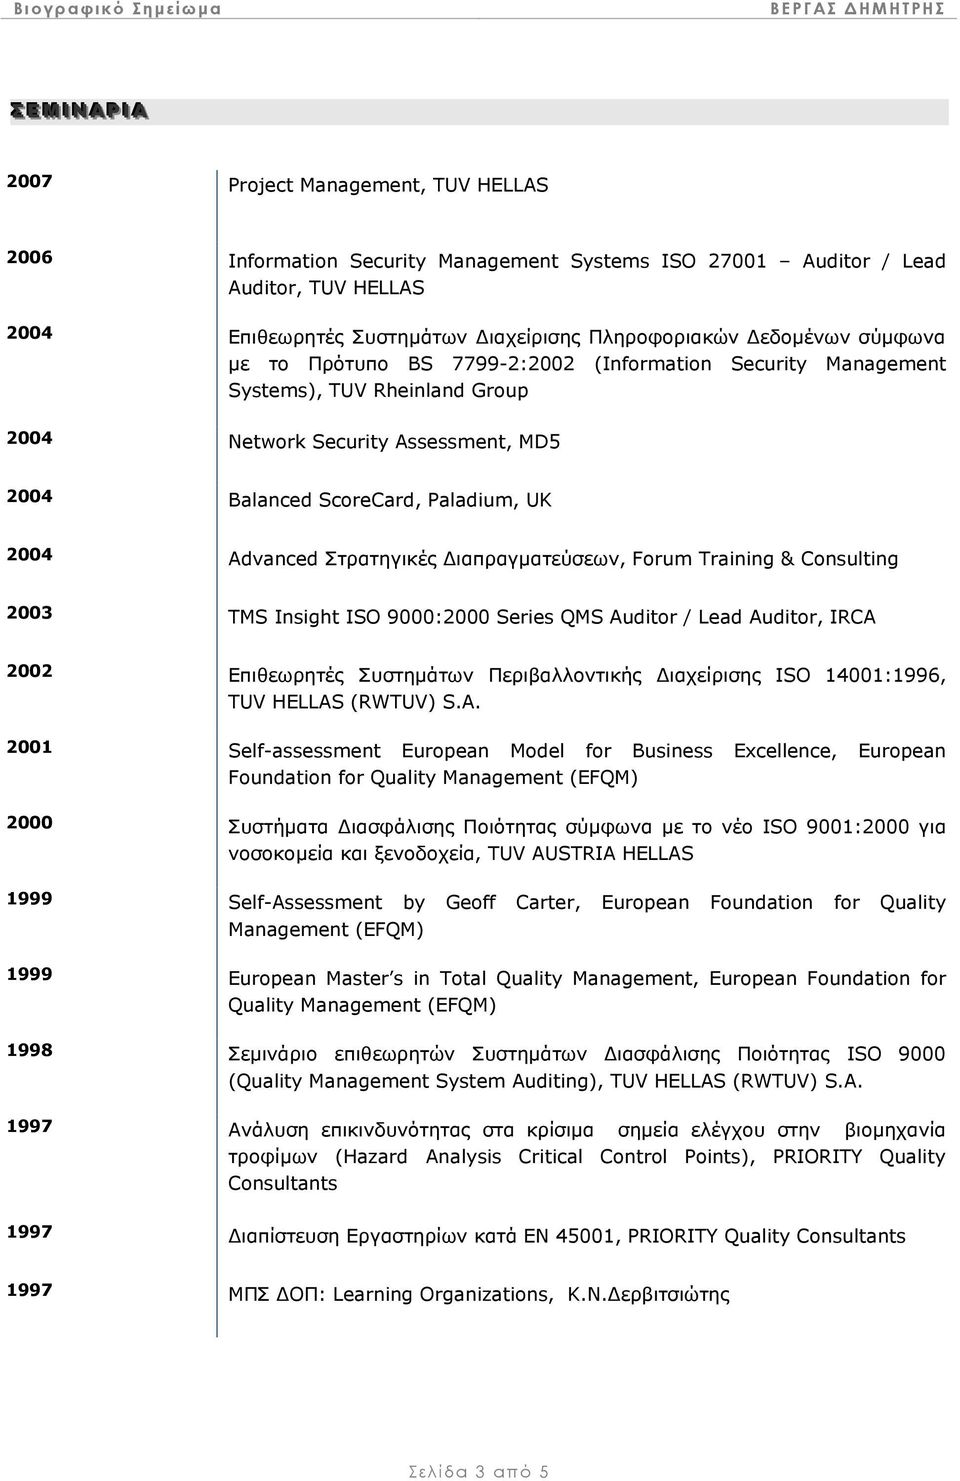 2004 Advanced Στρατηγικές ιαπραγµατεύσεων, Forum Training & Consulting 2003 TMS Insight ISO 9000:2000 Series QMS Auditor / Lead Auditor, IRCA 2002 Επιθεωρητές Συστηµάτων Περιβαλλοντικής ιαχείρισης